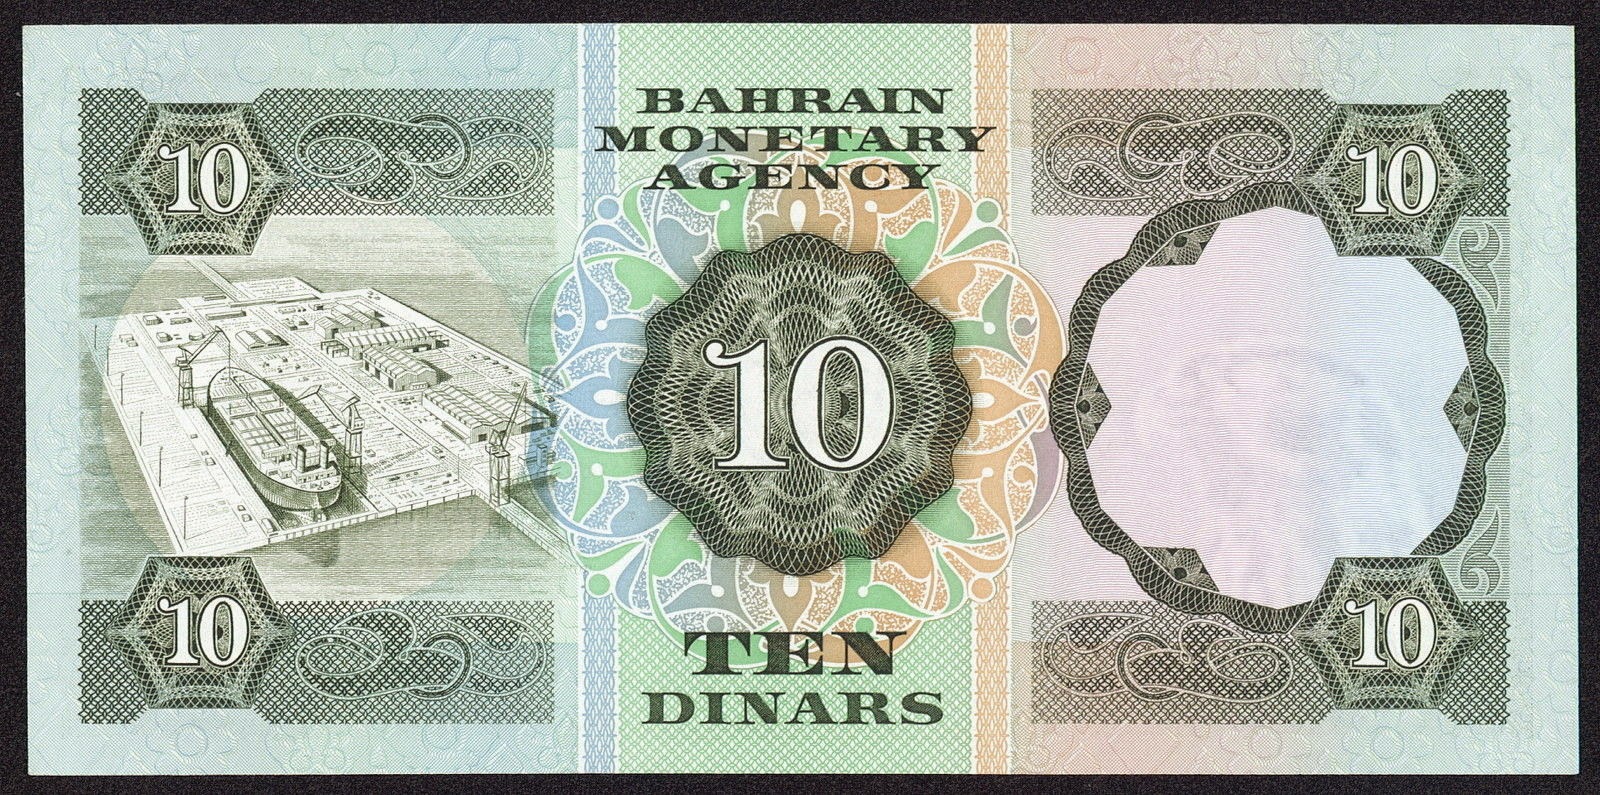 Bahrain Money Currency 10 Dinar bank note 1979 Bahrain Monetary Agency